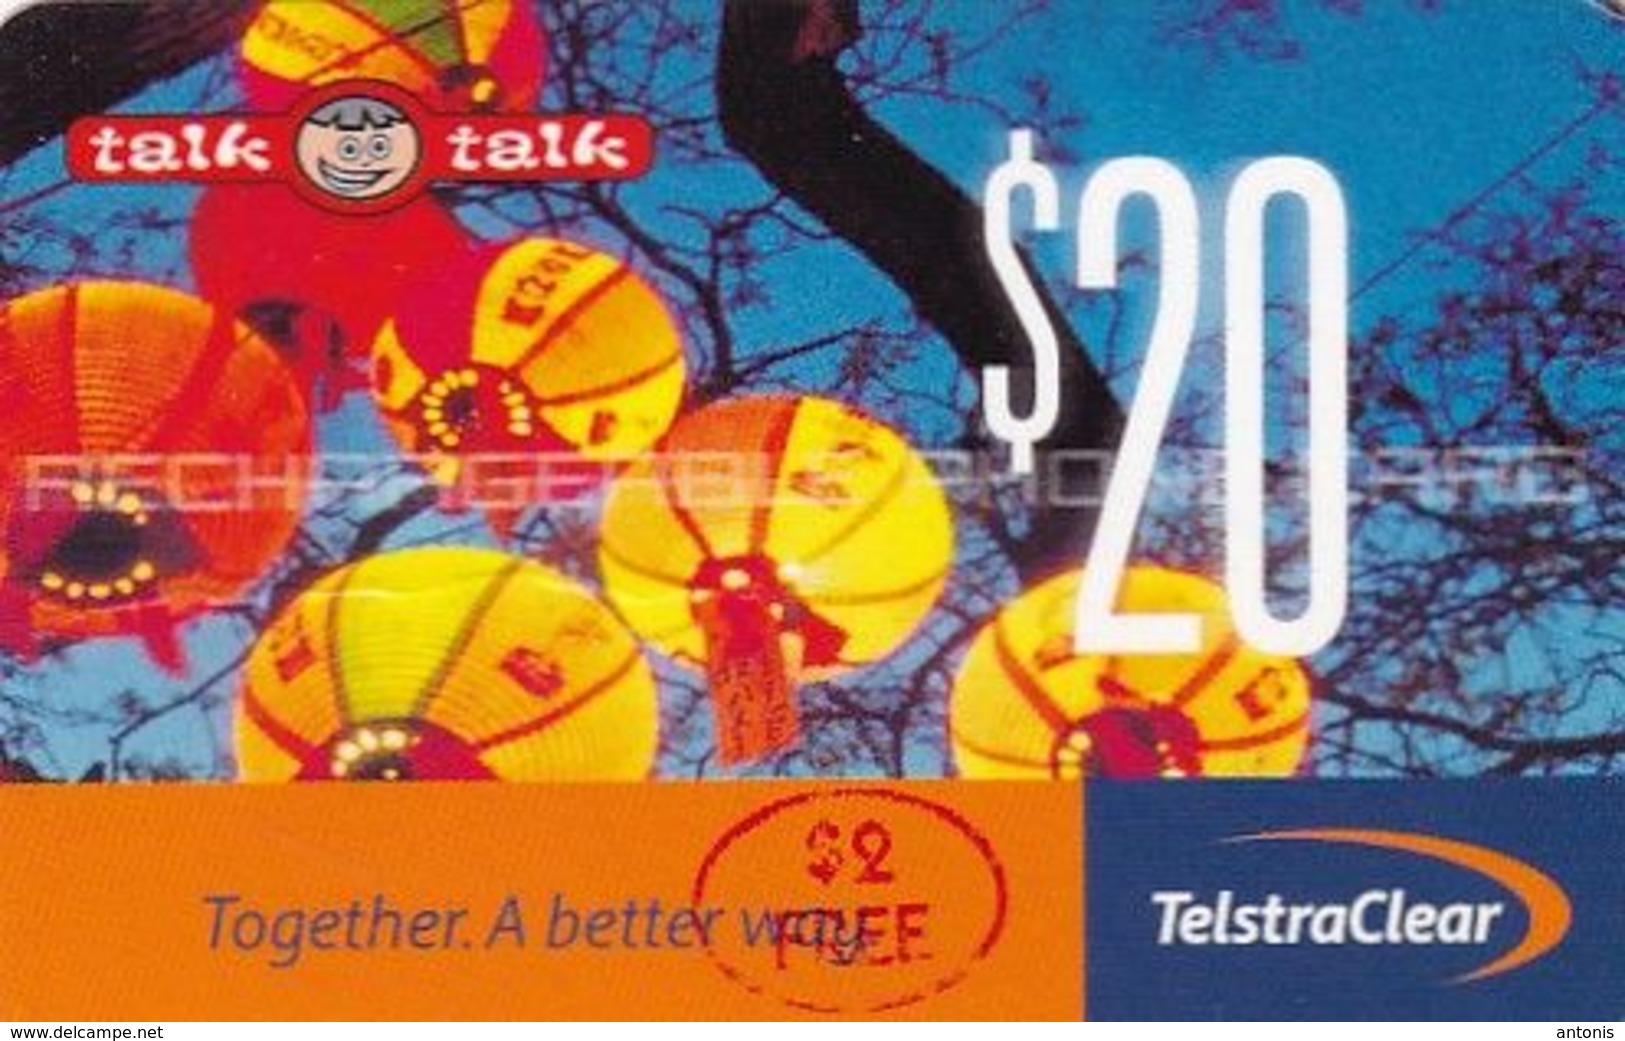 NEW ZEALAND - Lanterns, TelstraClear Prepaid Card $20, Used - New Zealand